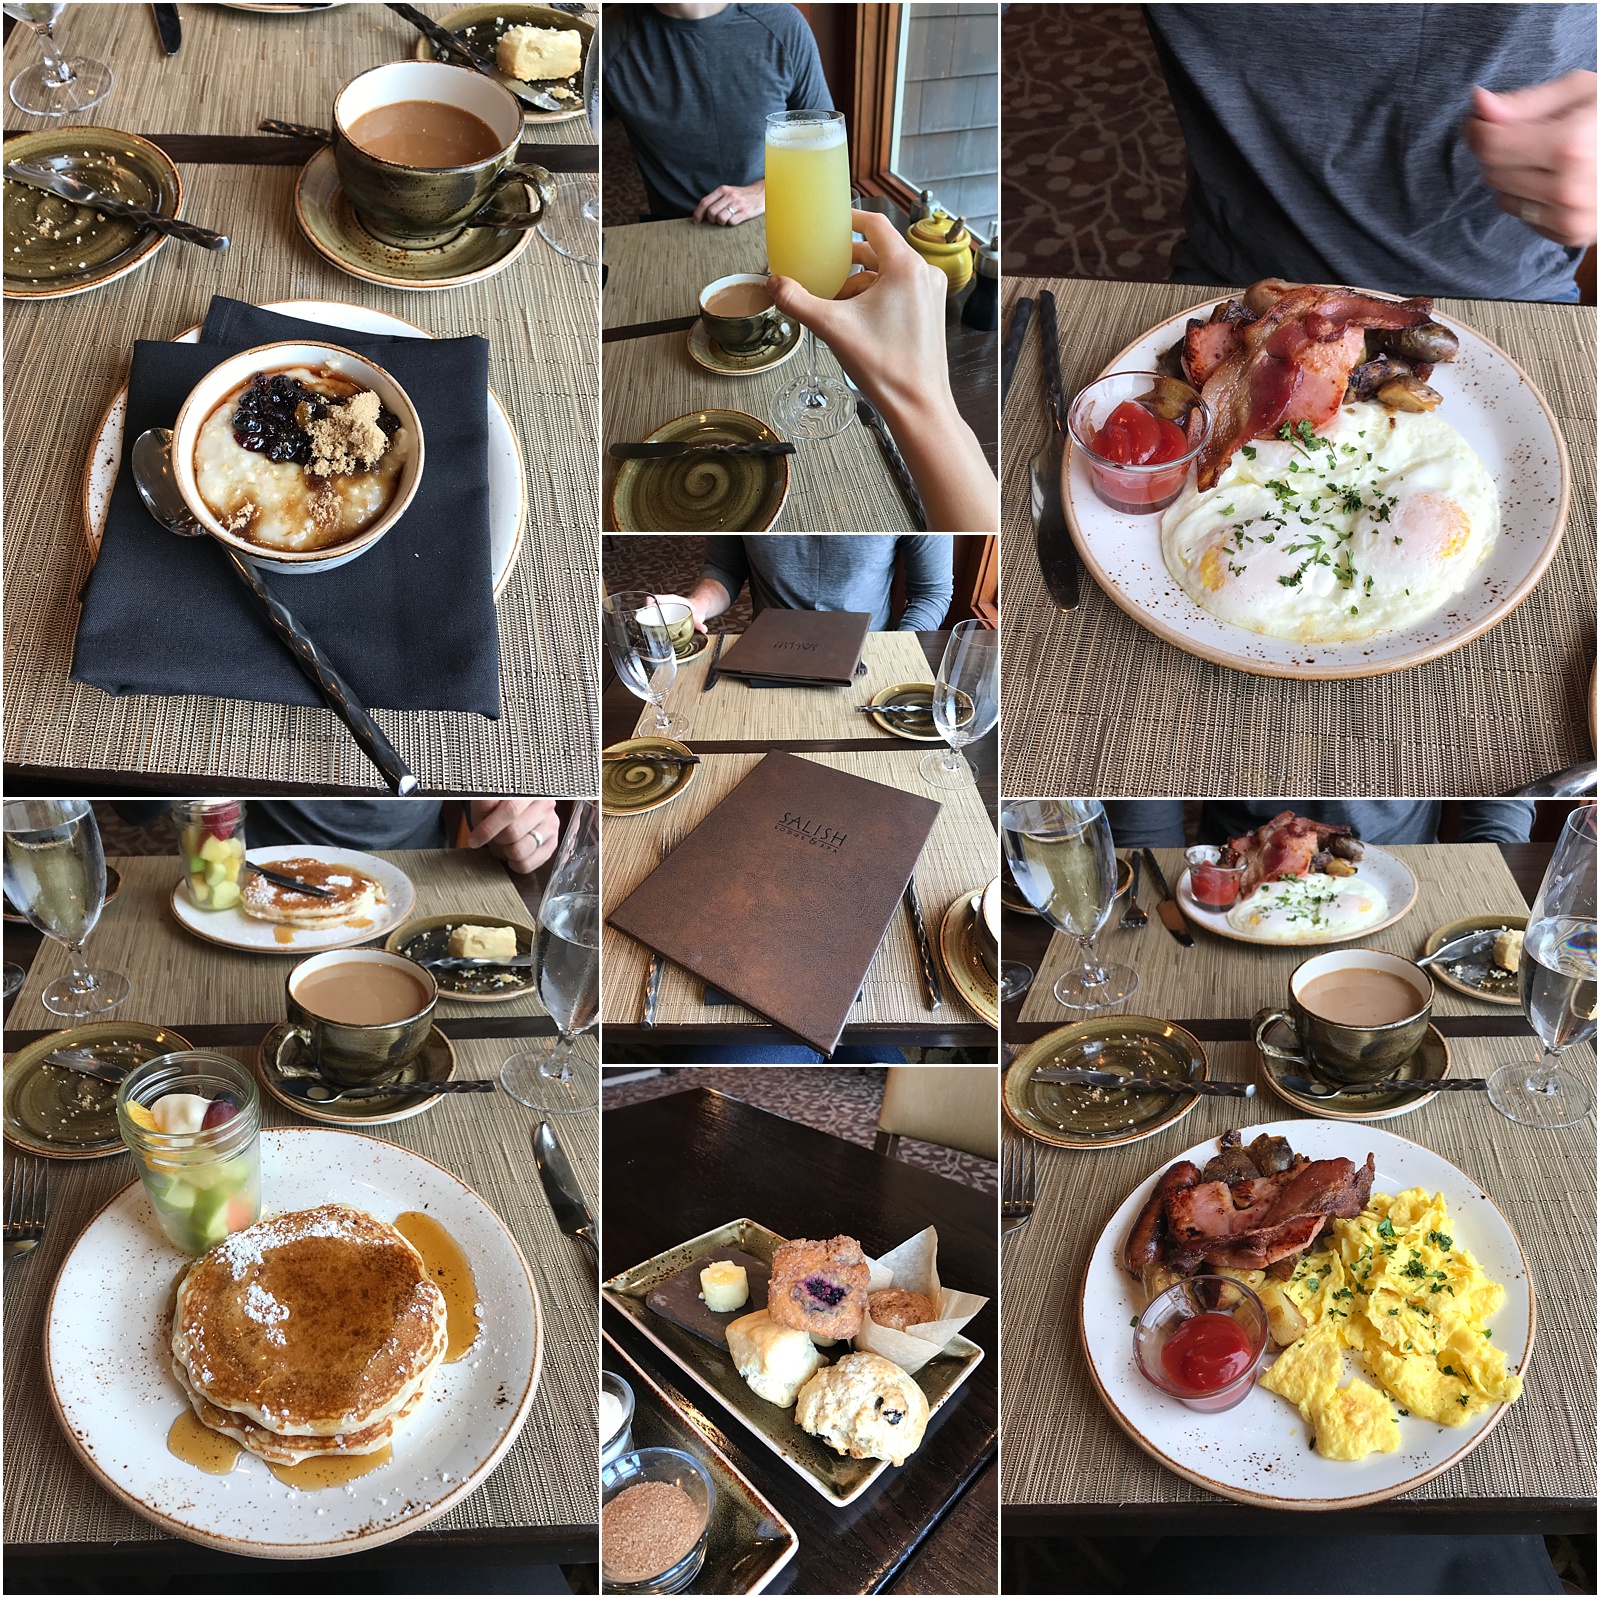 breakfast foods and drinks at Salish Lodge in Washington